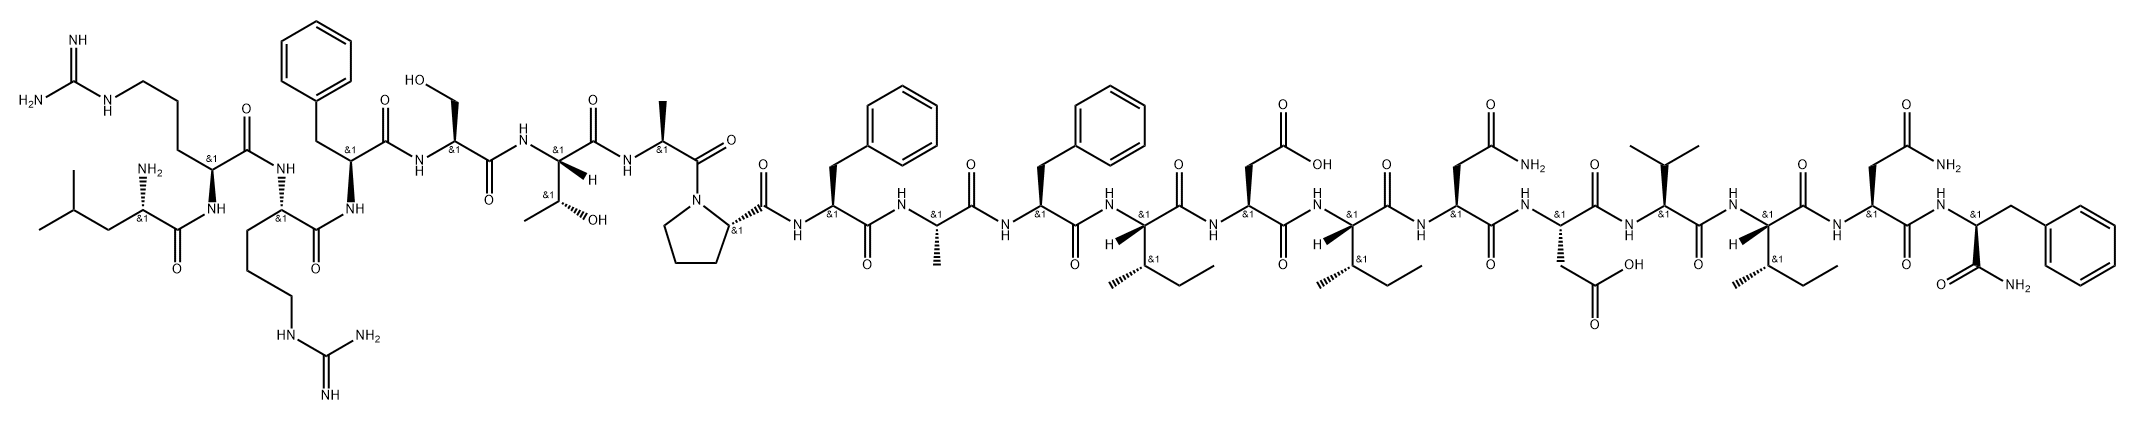 L-Phenylalaninamide, L-leucyl-L-arginyl-L-arginyl-L-phenylalanyl-L-seryl-L-threonyl-L-alanyl-L-prolyl-L-phenylalanyl-L-alanyl-L-phenylalanyl-L-isoleucyl-L-α-aspartyl-L-isoleucyl-L-asparaginyl-L-α-aspartyl-L-valyl-L-isoleucyl-L-asparaginyl- Structure